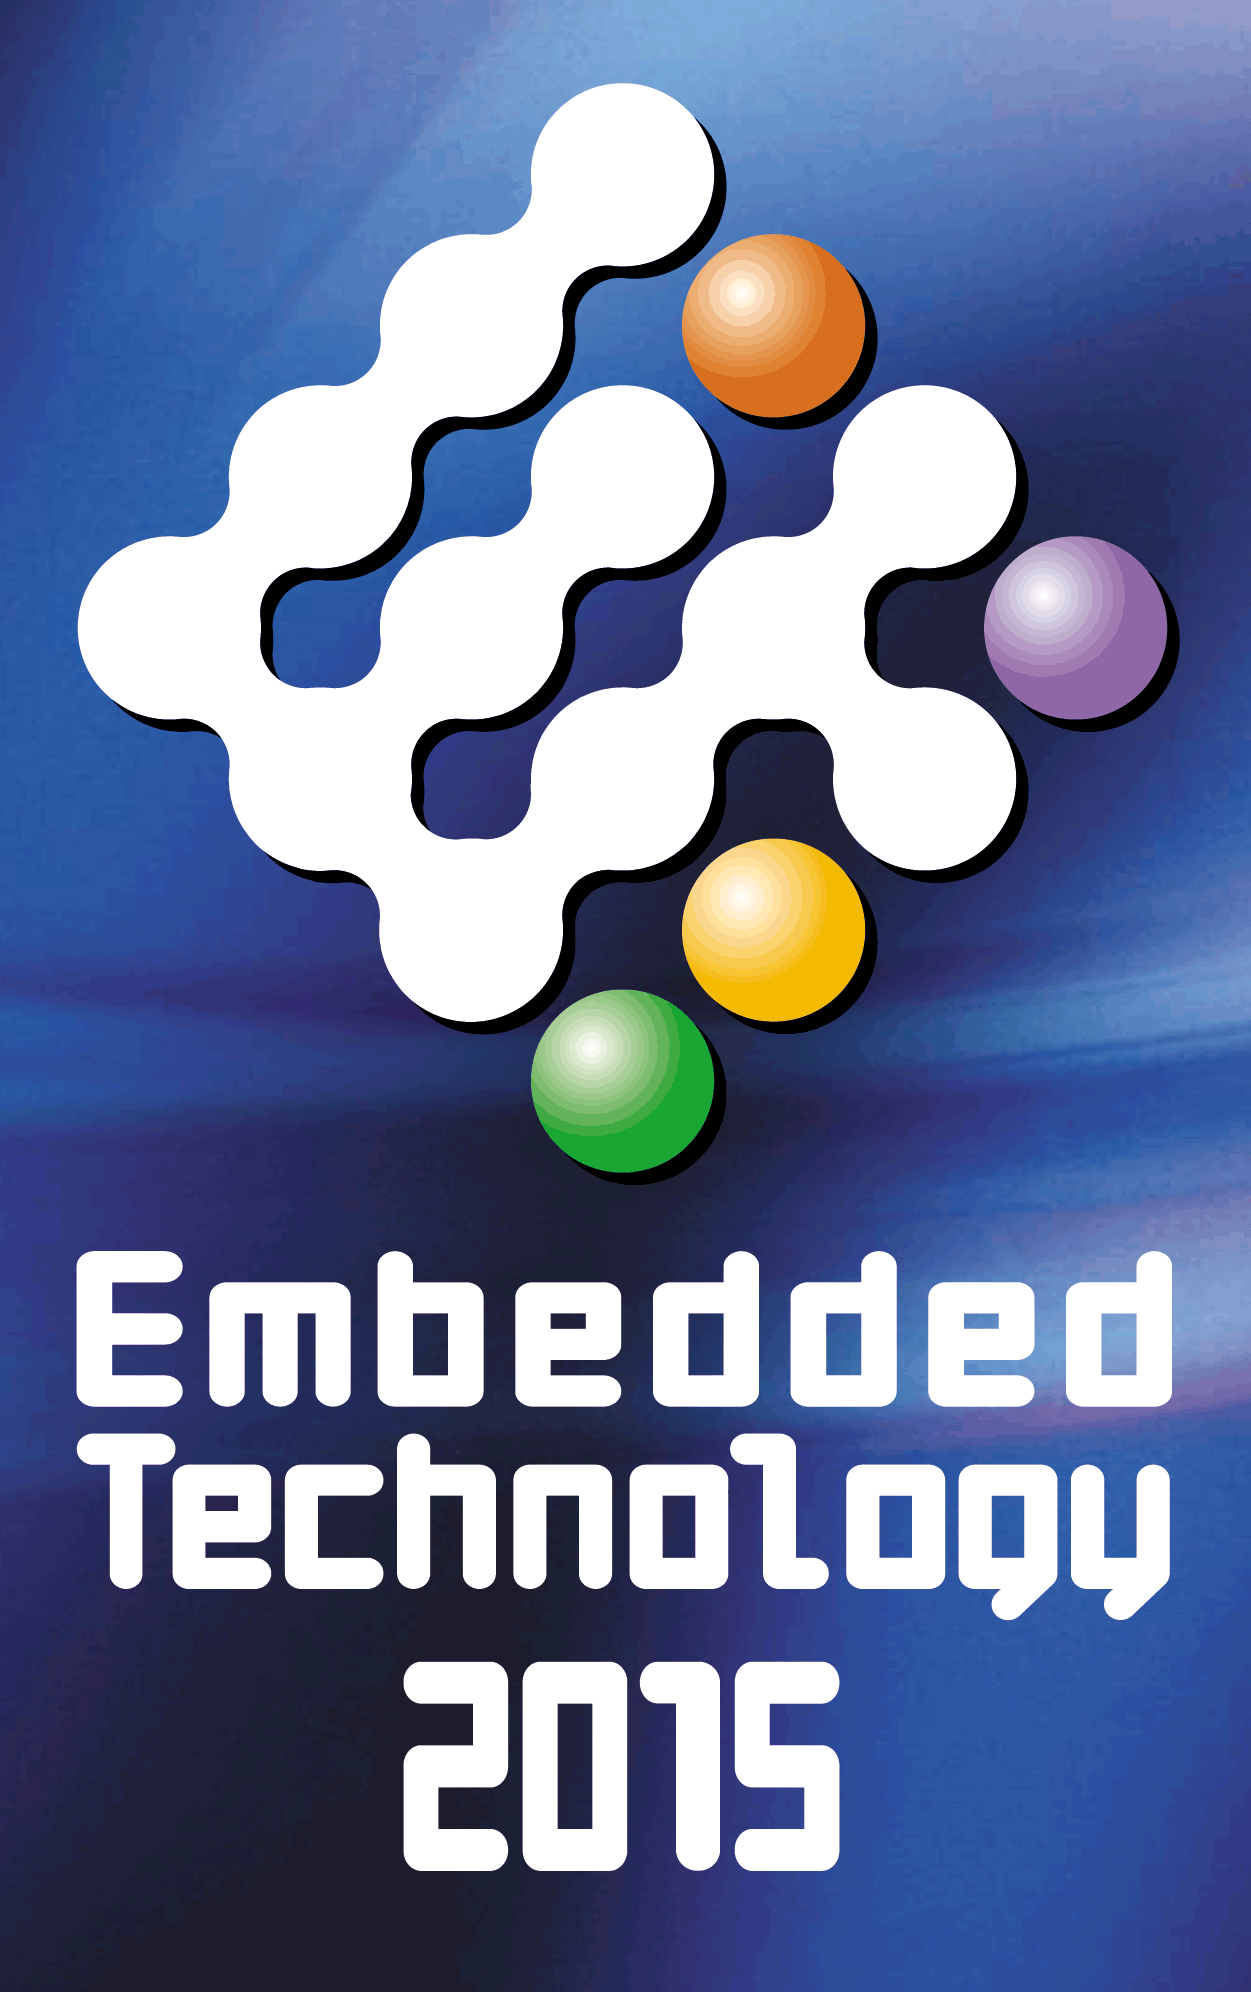 Embedded Technology 2015